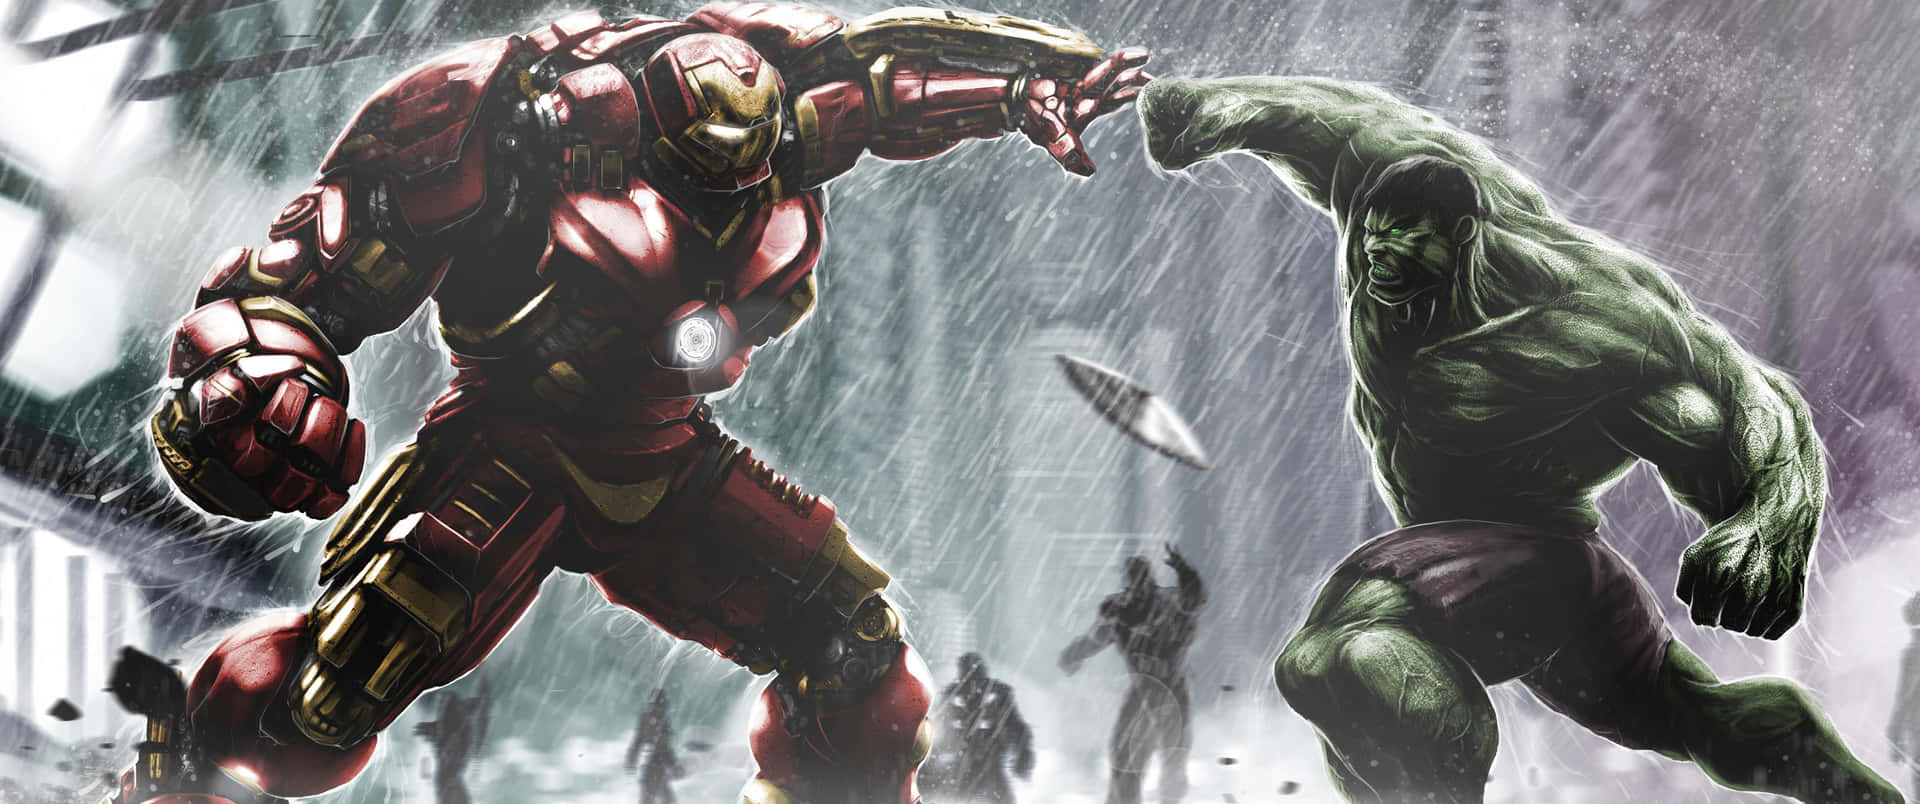 hulk and iron man fighting in the rain